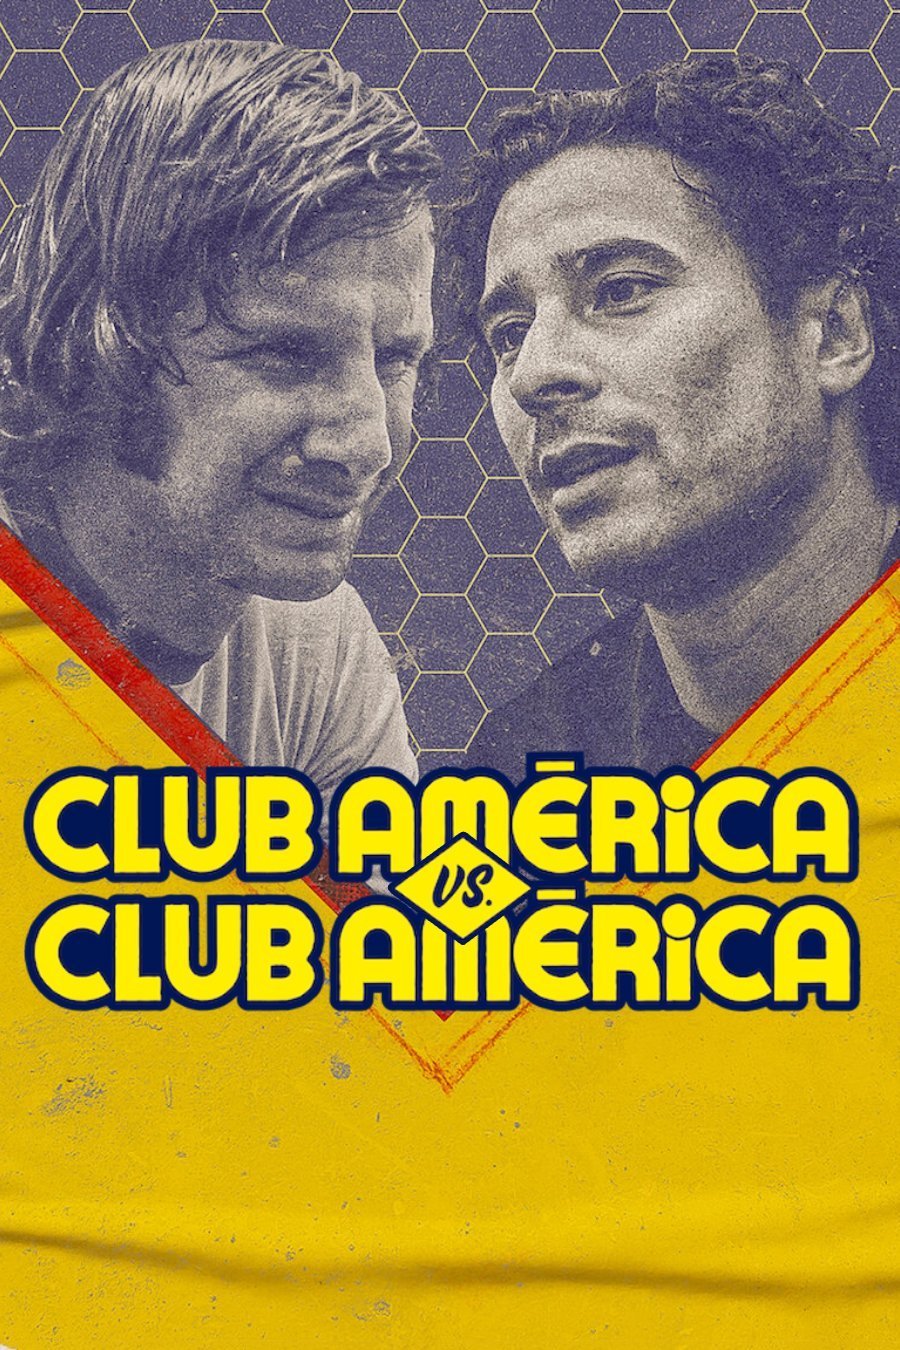 L'affiche originale du film Club América vs. Club América en espagnol